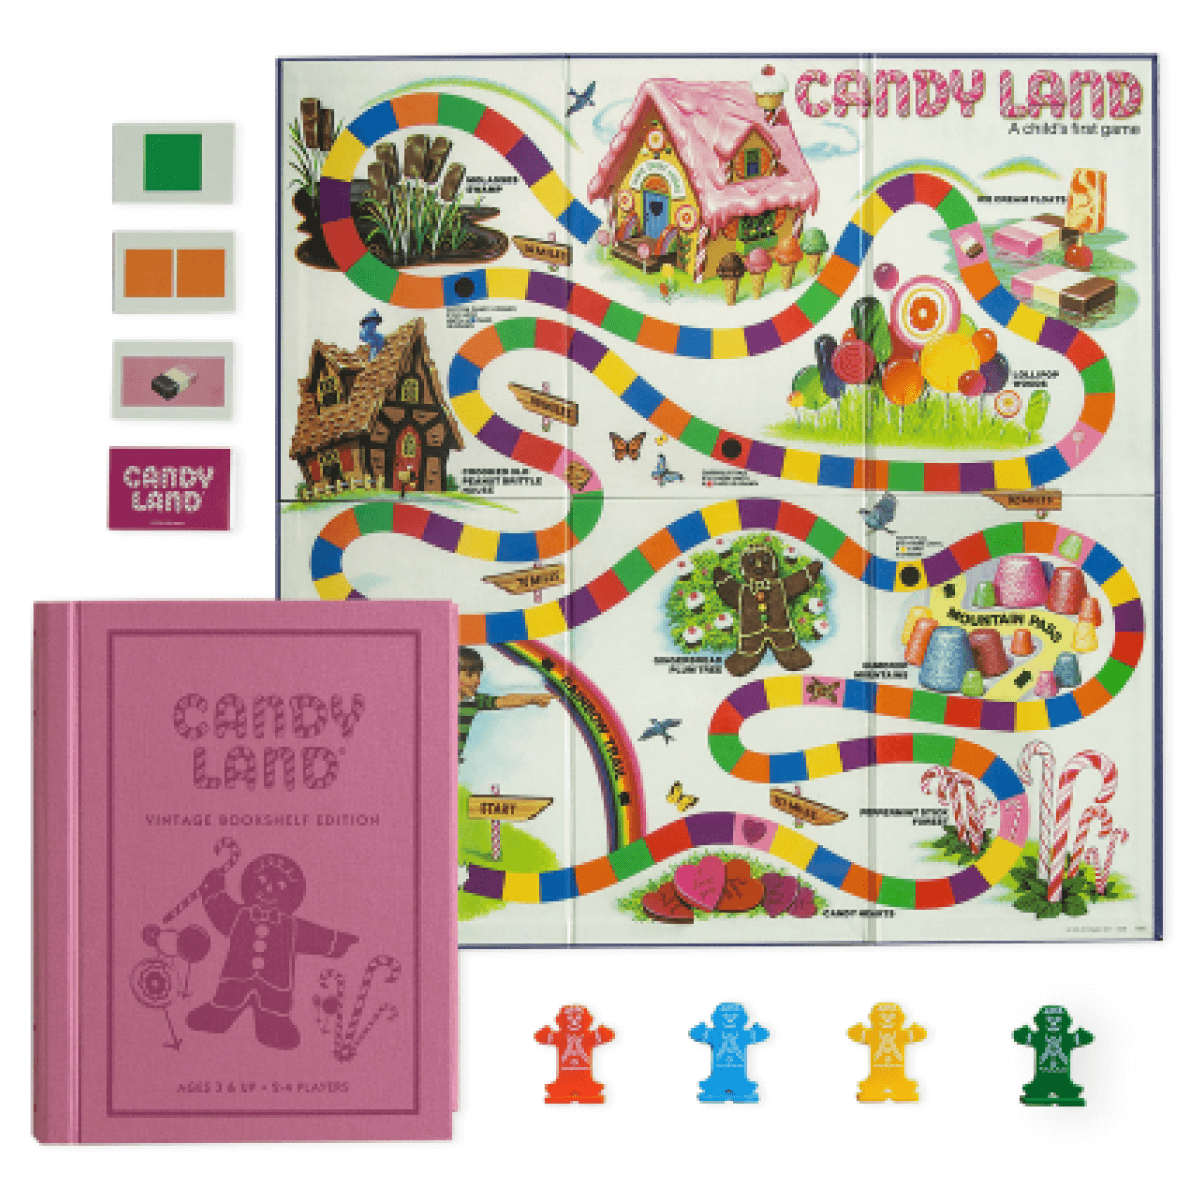 Candy Land - Vintage Bookshelf Edition